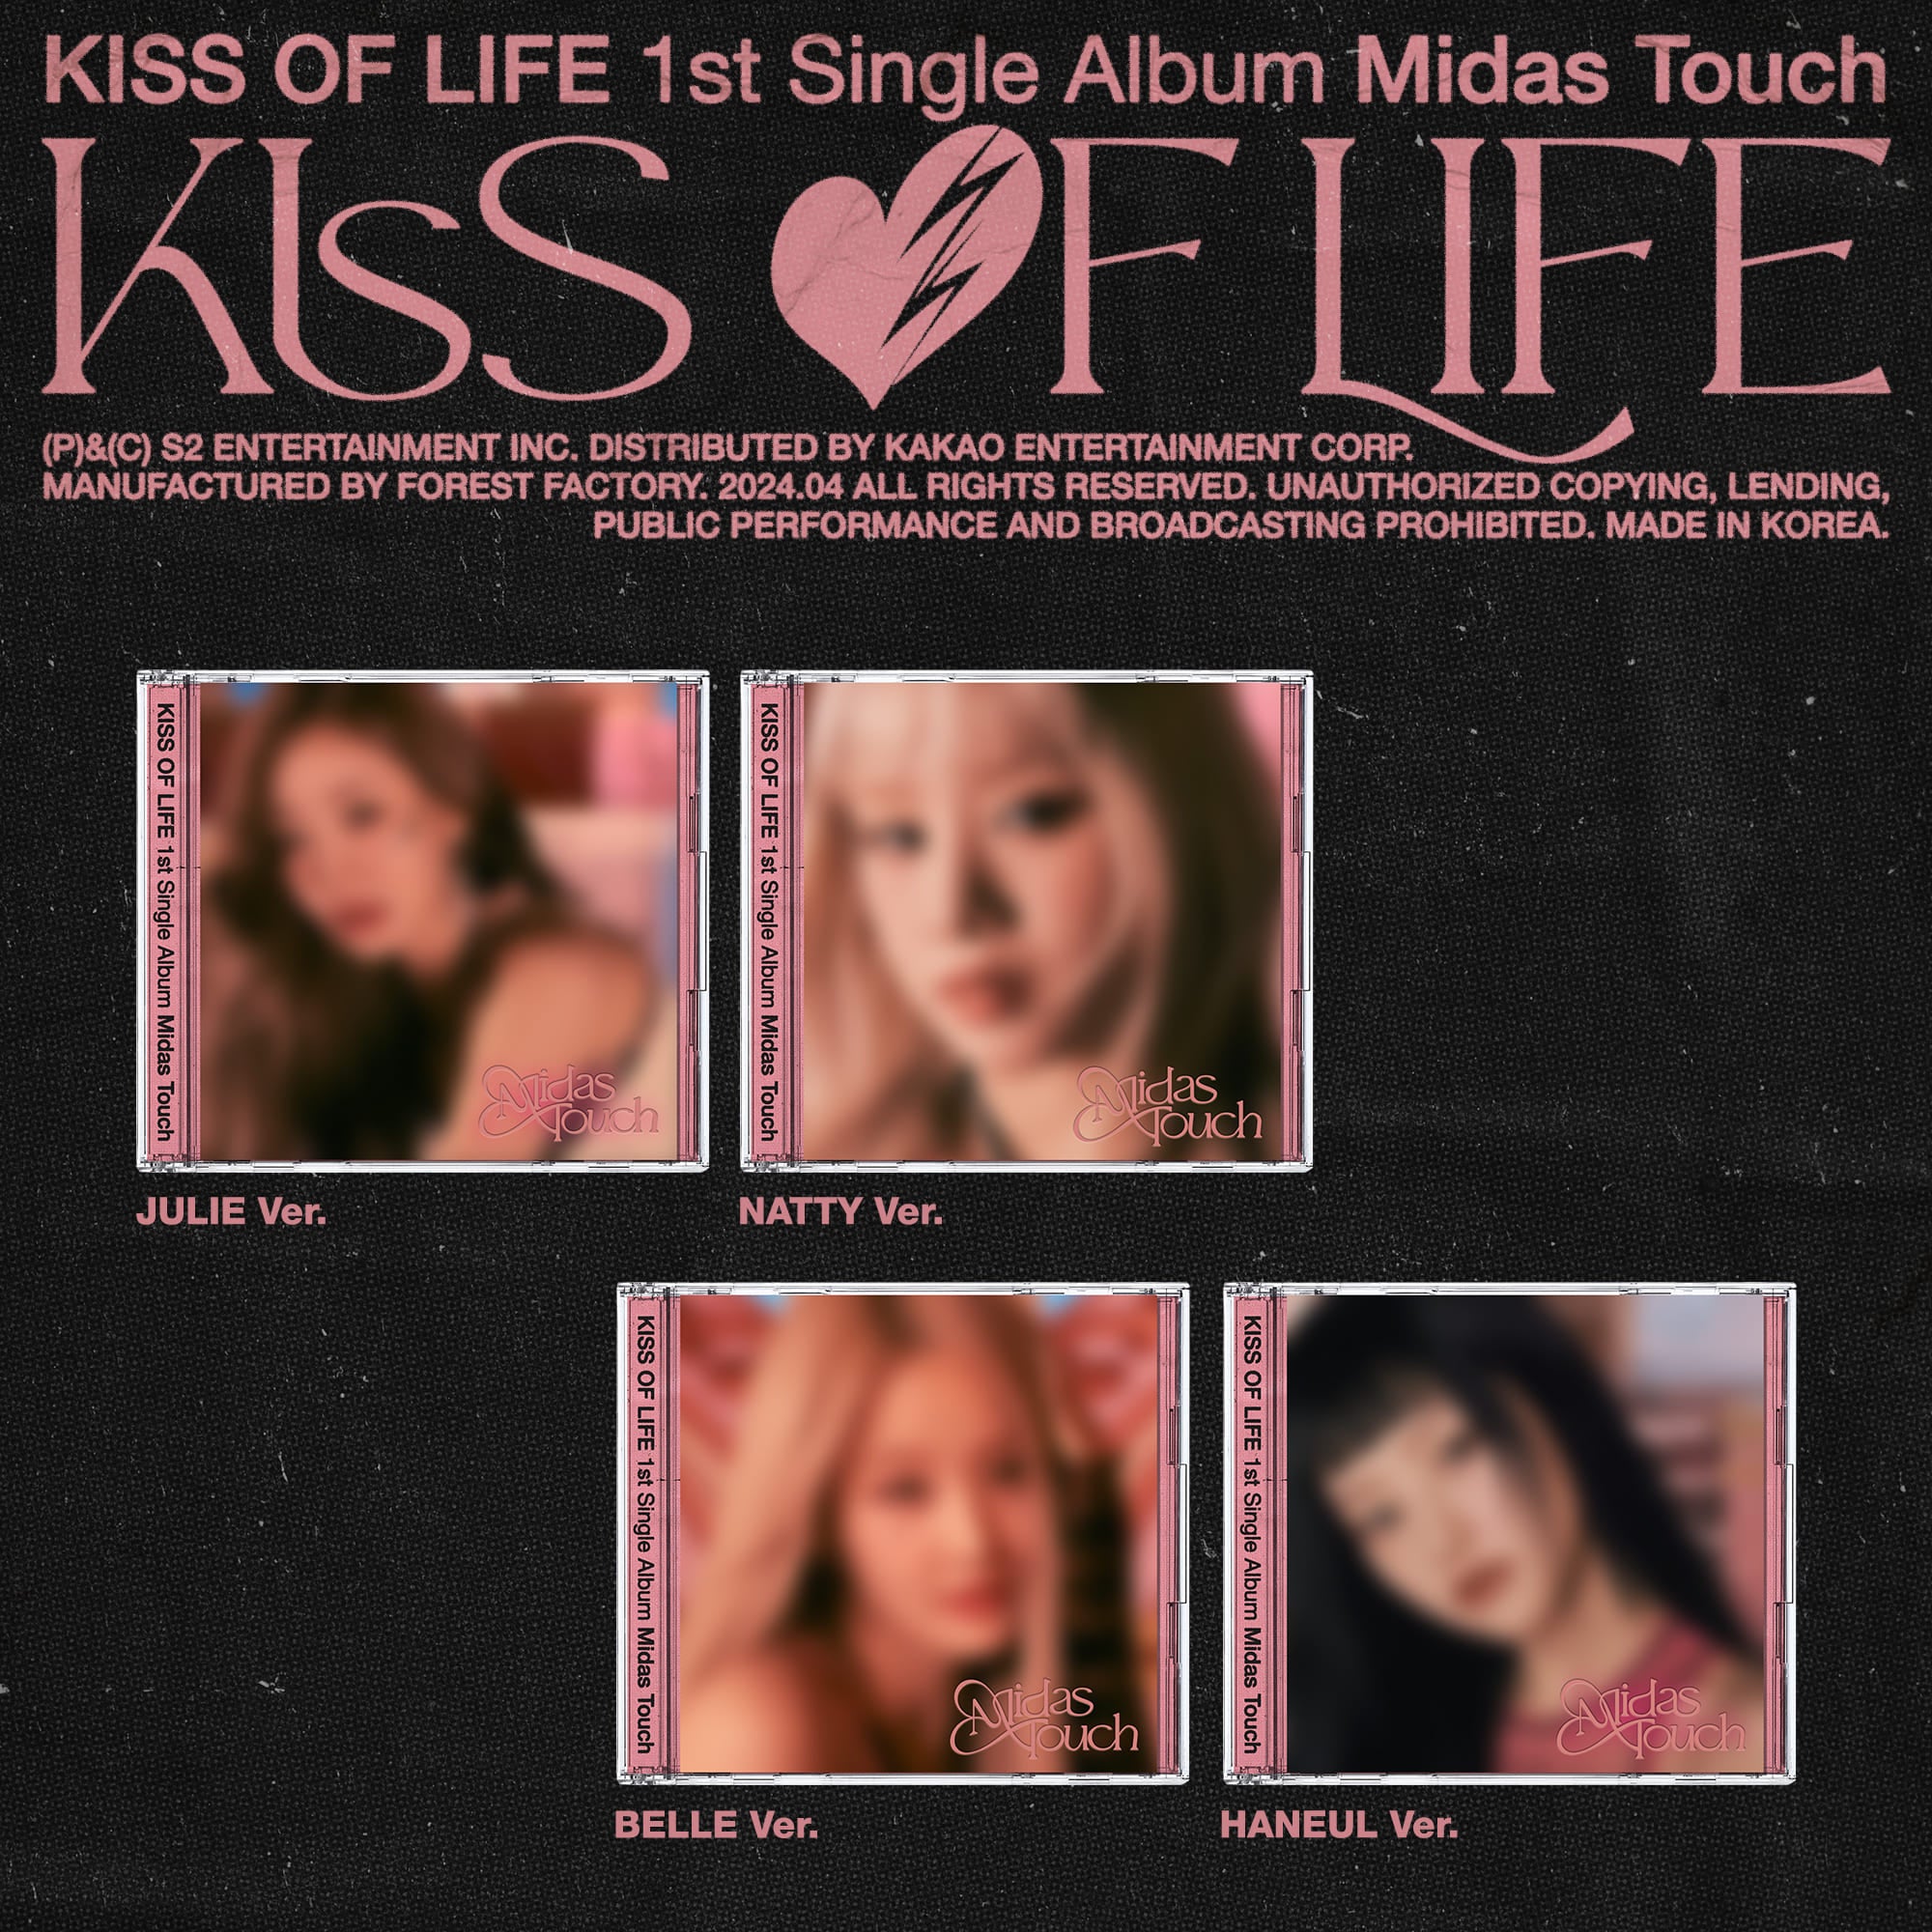 KISS OF LIFE 1st Single Album Midas Touch (Jewel Version)